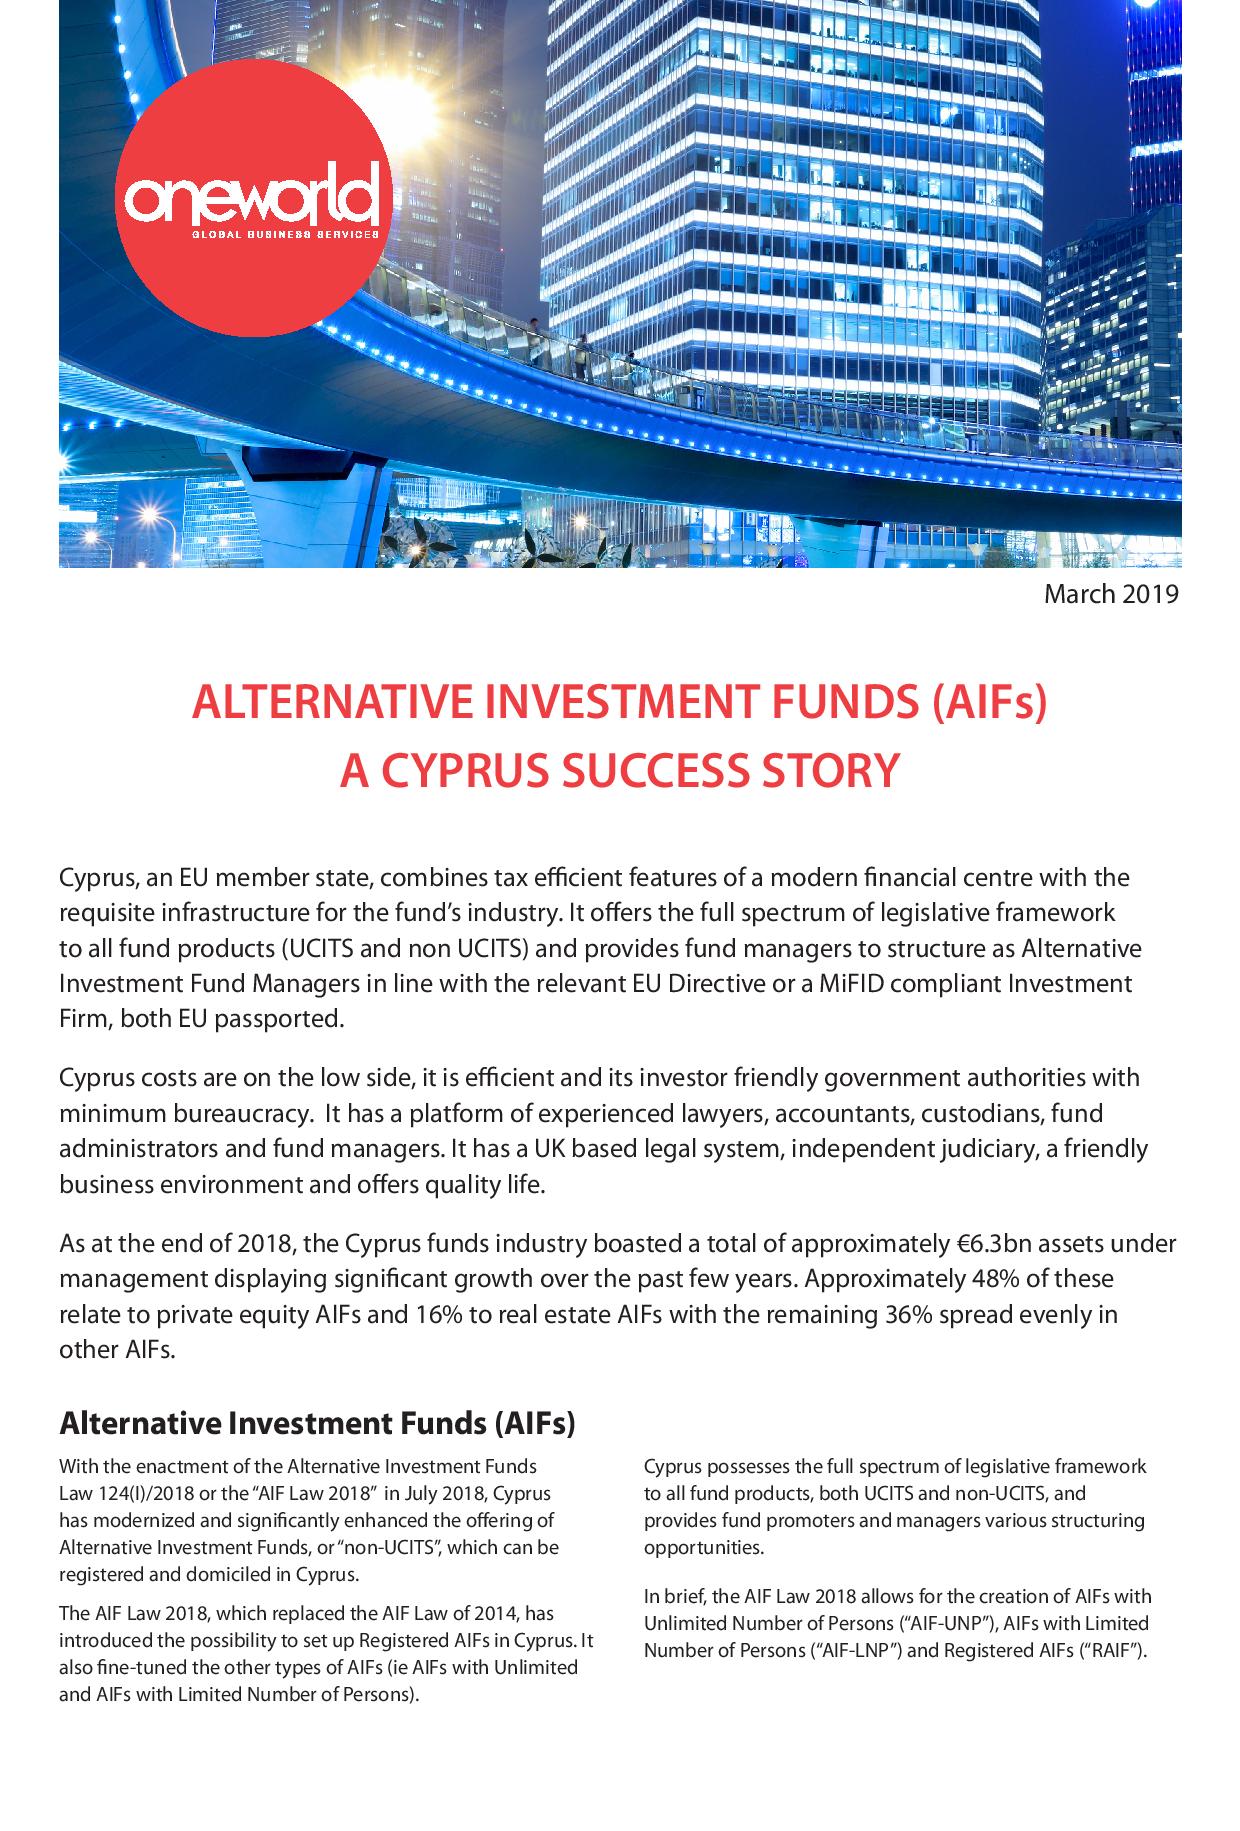 Oneworld Ltd: Alternative Investment Funds (AIFs) - A Cyprus Success Story